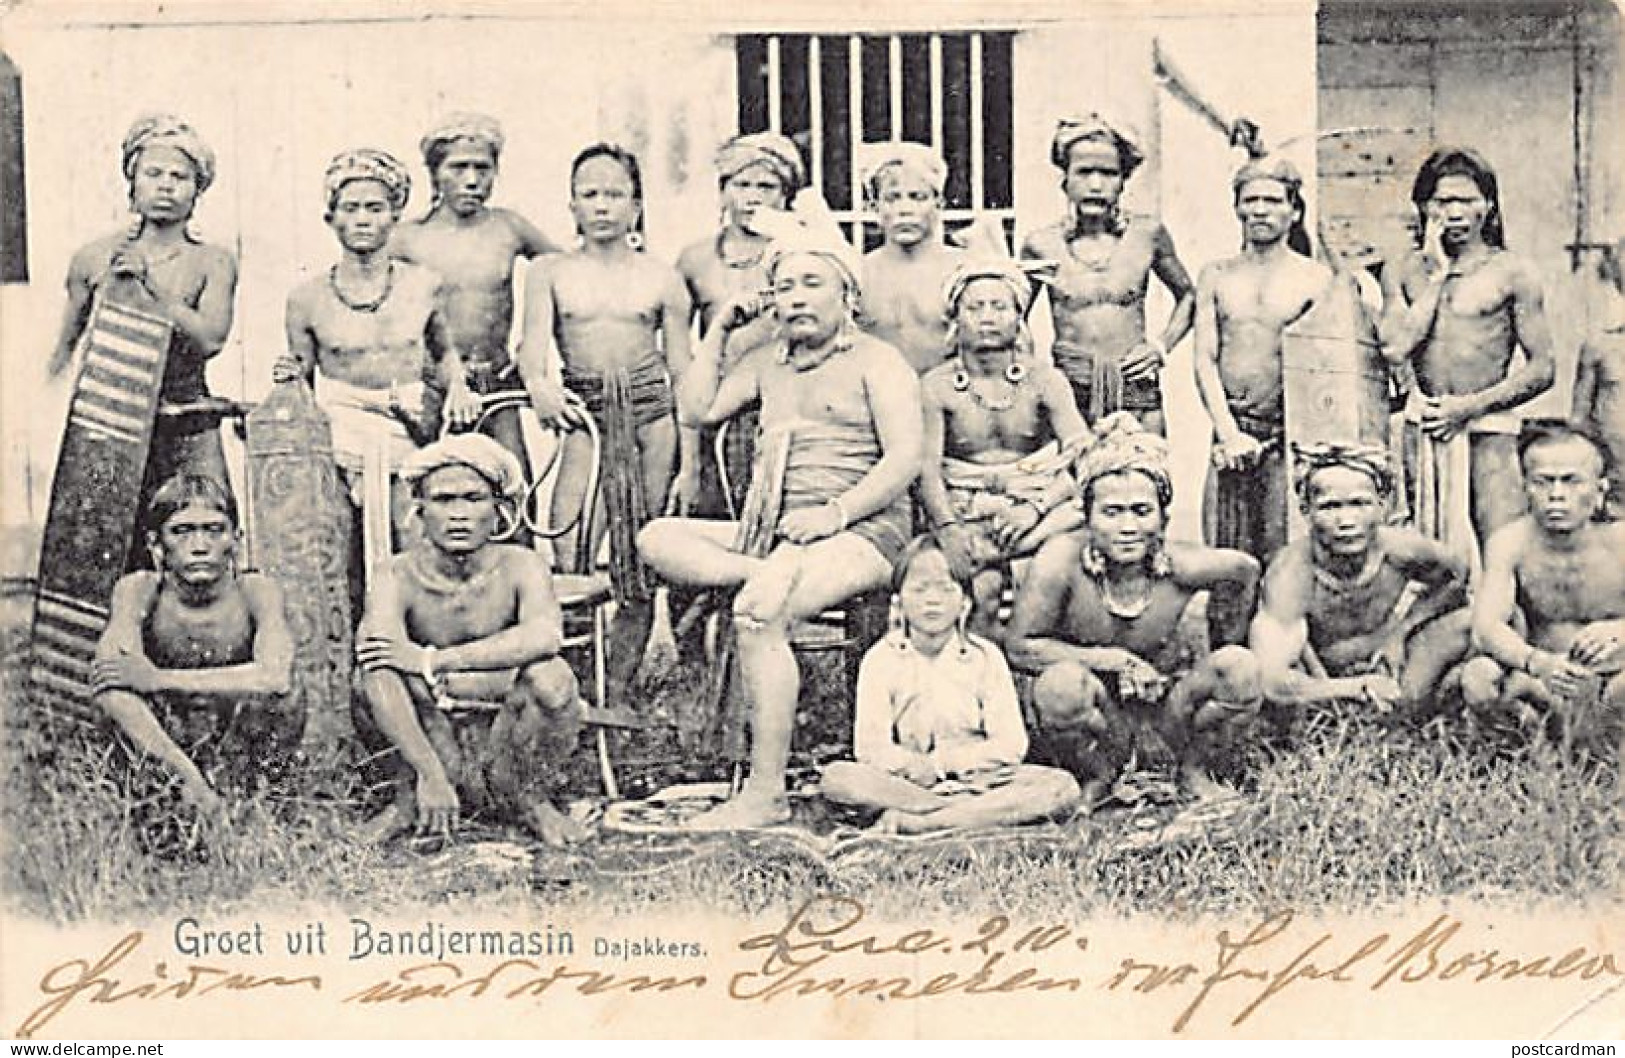 Indonesia - BANJARMASIN Borneo - Dayak Hunters - Indonesië